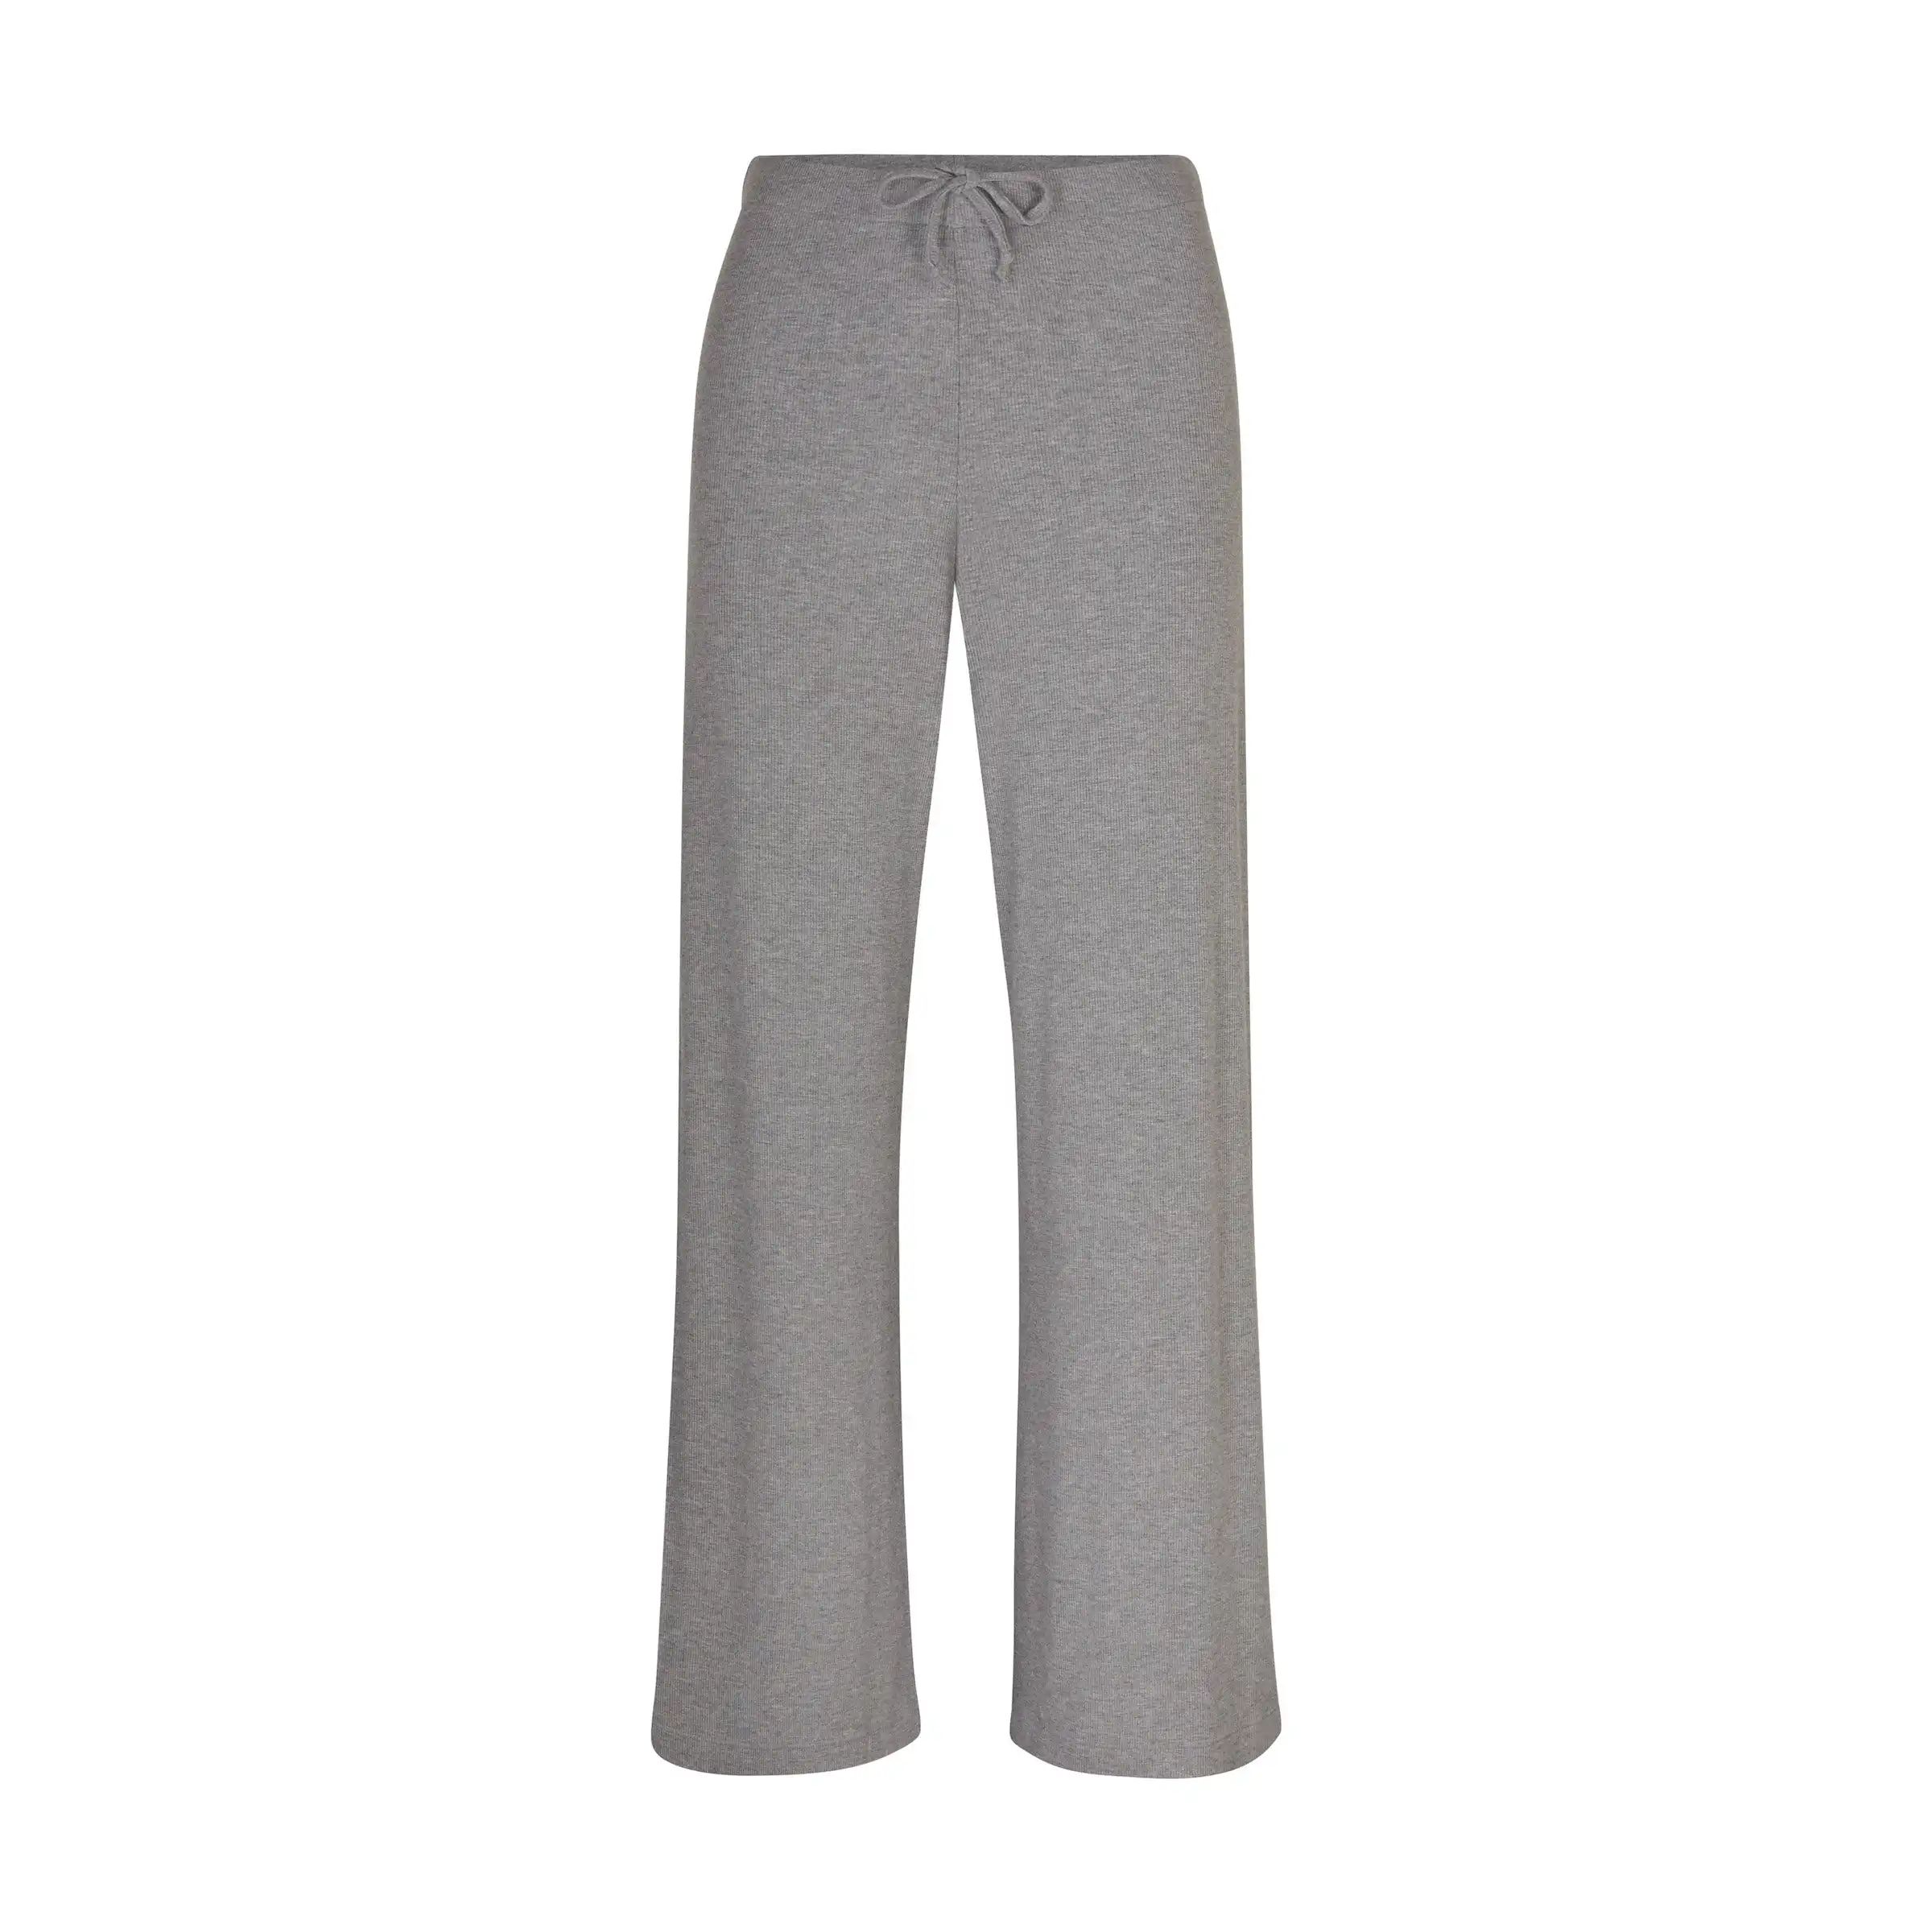 Womens Pyjama Sleep Bottoms Lightweight Soft Casual Lounge Sleepwear Long Modal Pants